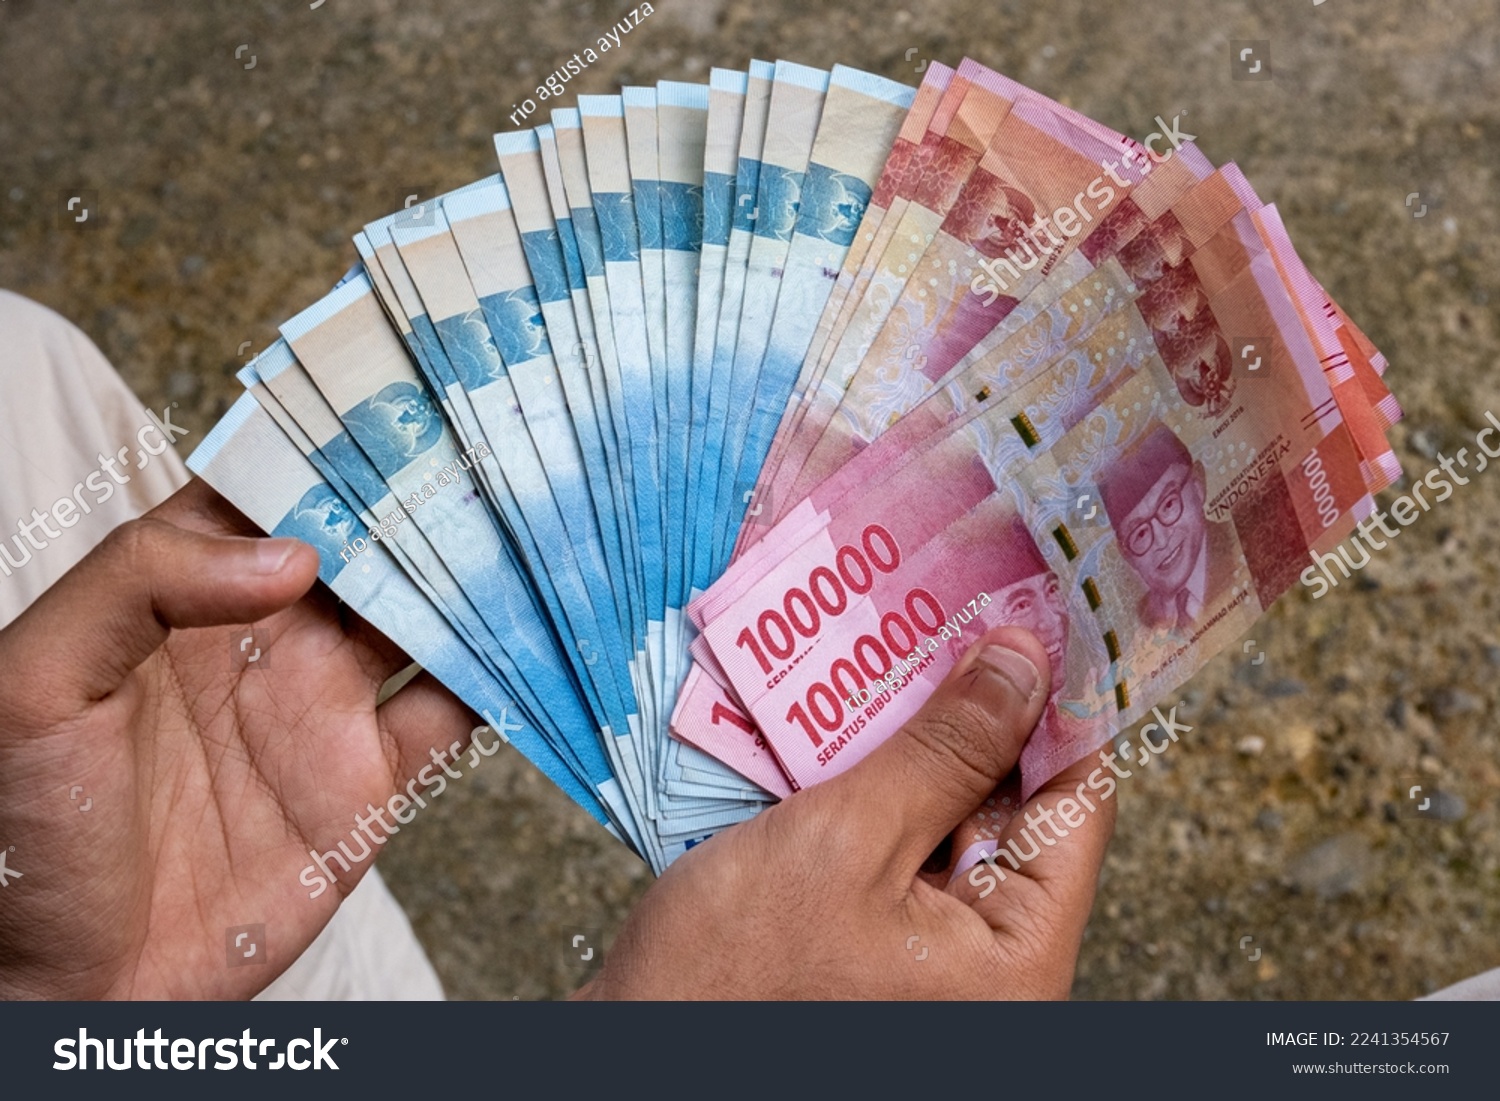 man showing Indonesian rupiah banknotes #2241354567